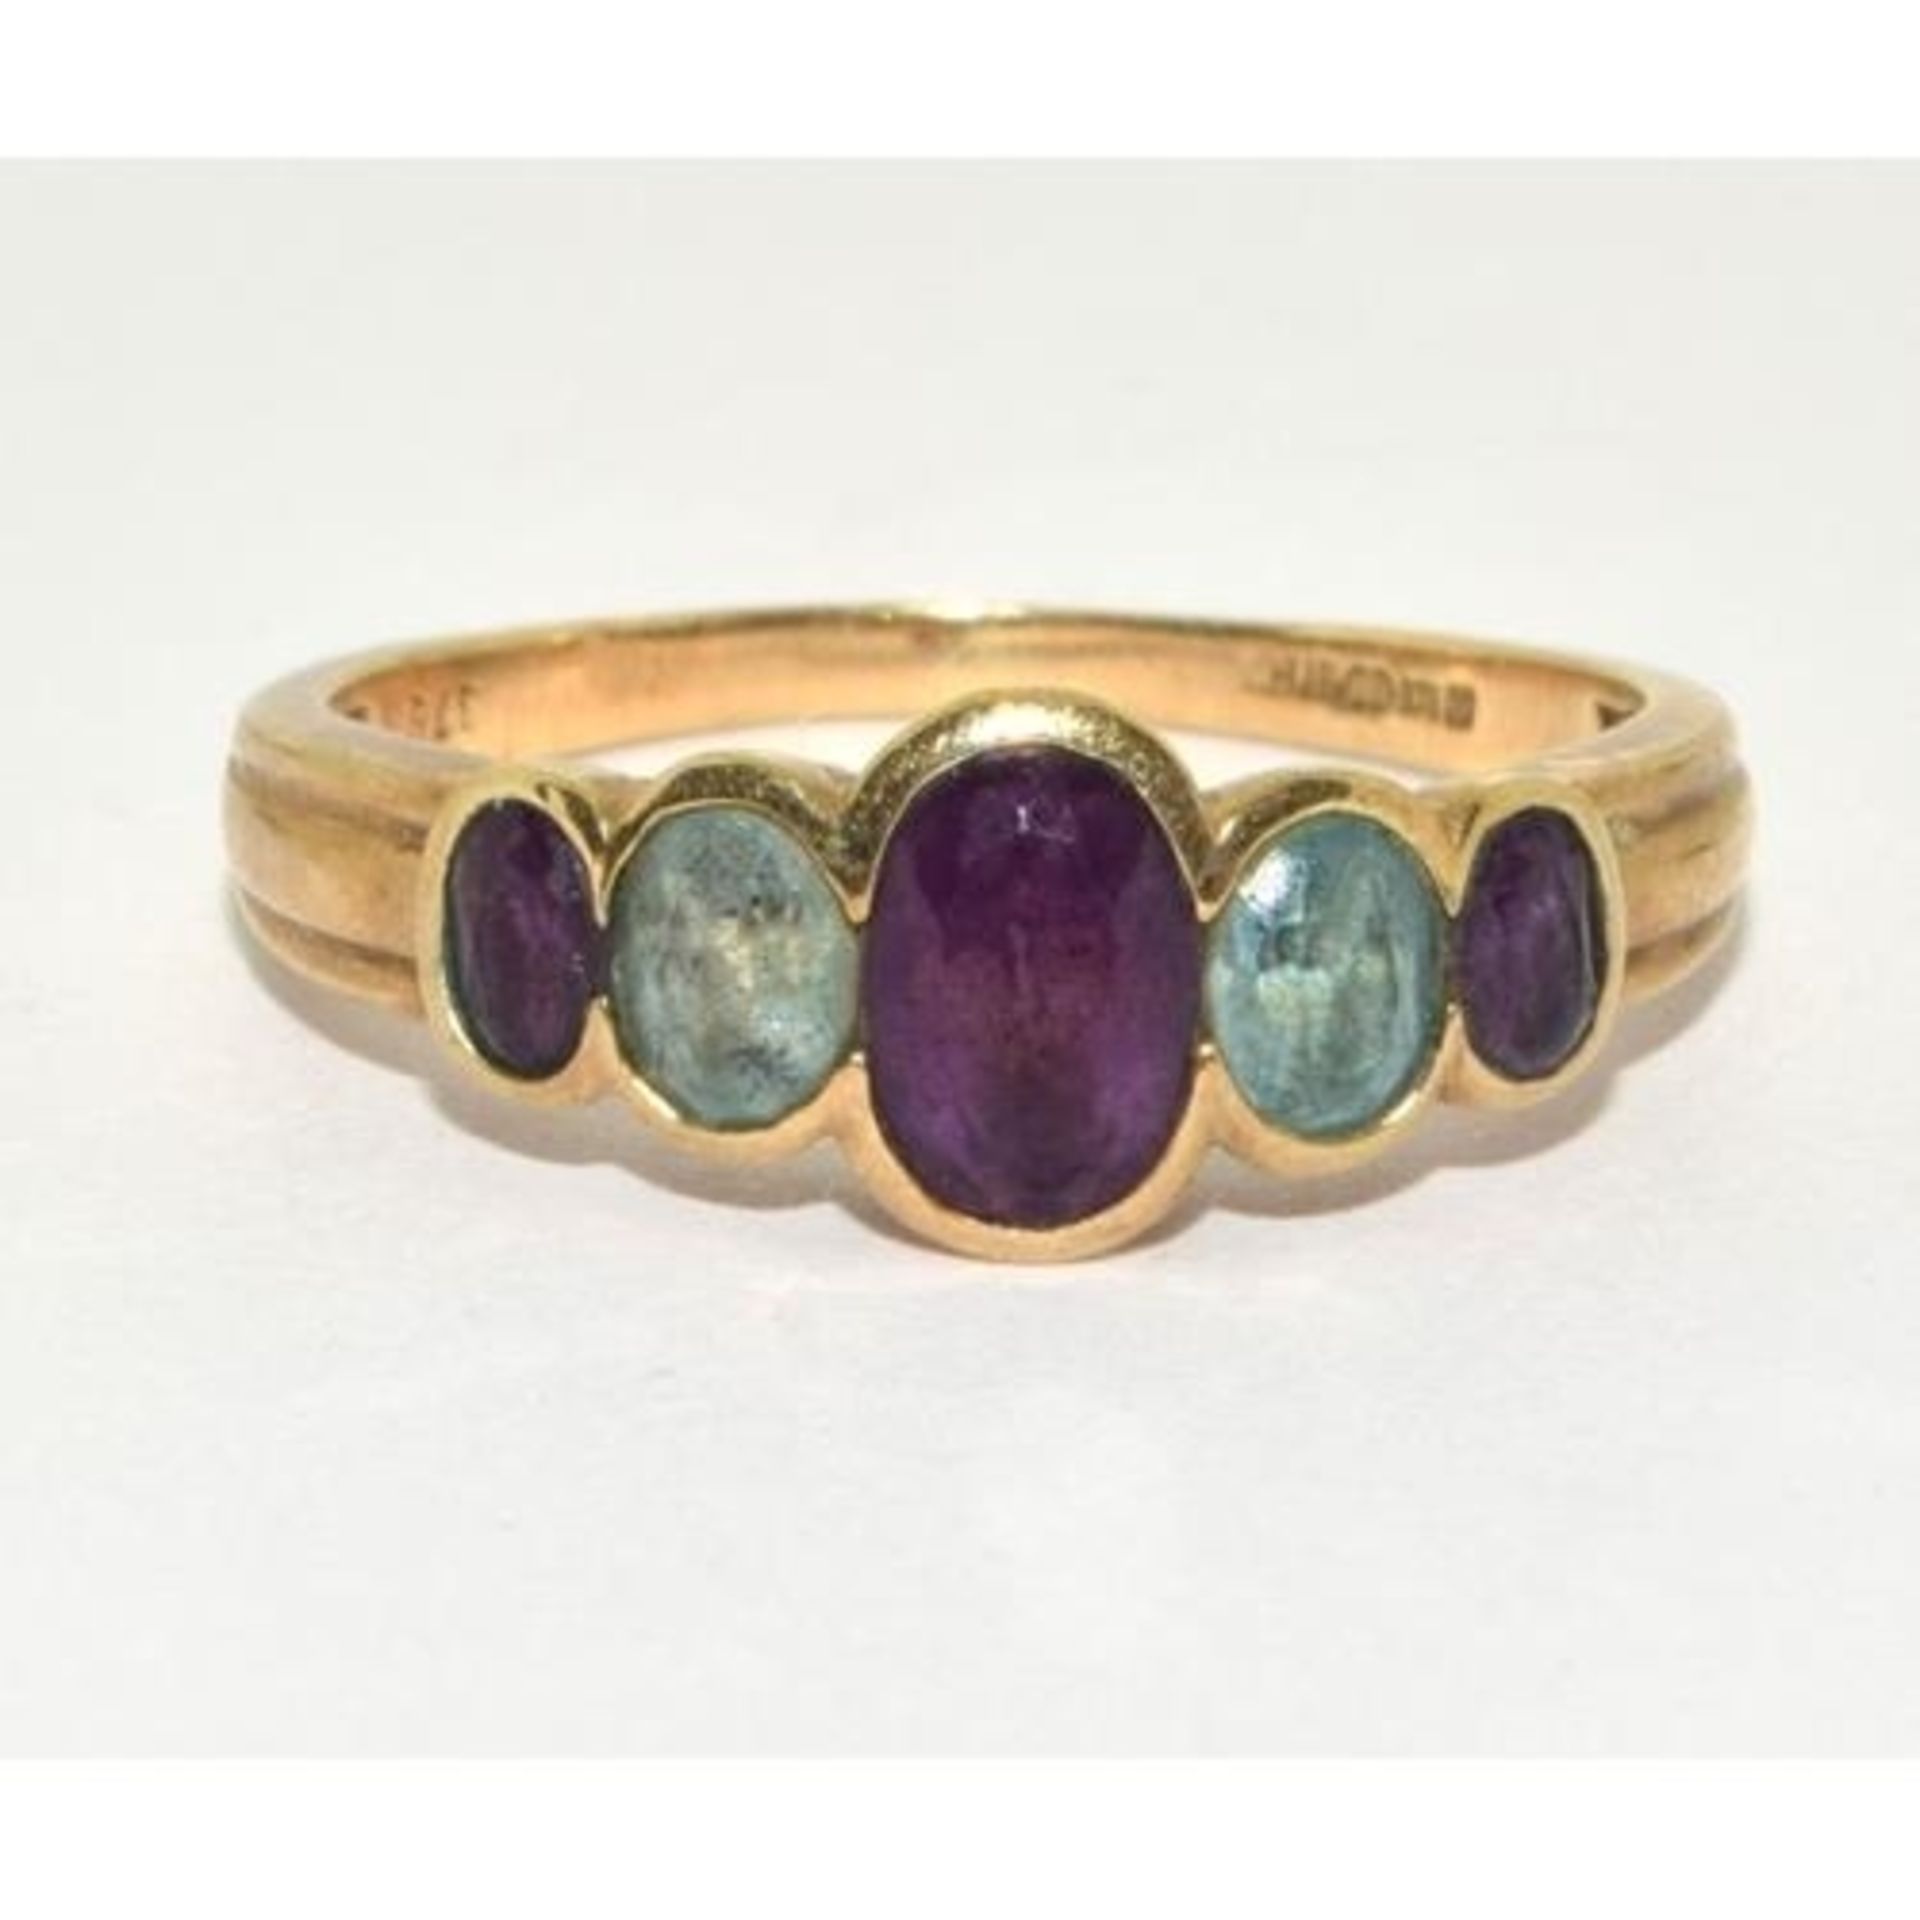 9ct gold ladies antique set Amethyst and aquamarine 5 stone ring size O - Image 5 of 5